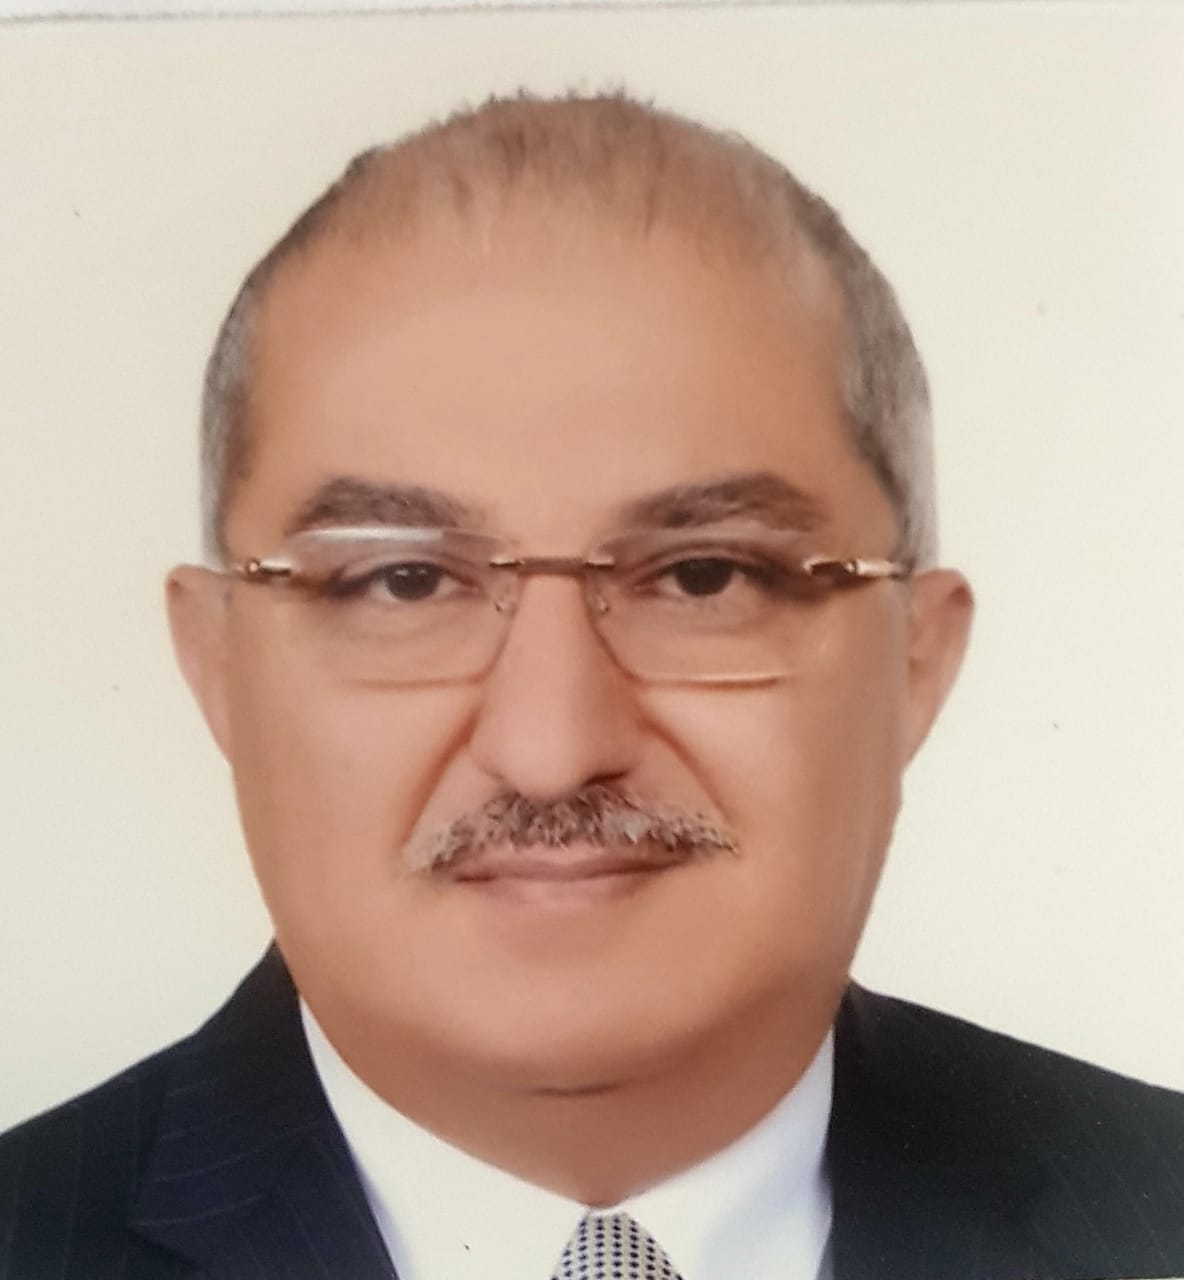 Tarek Abdullah Morsy El-Gammal